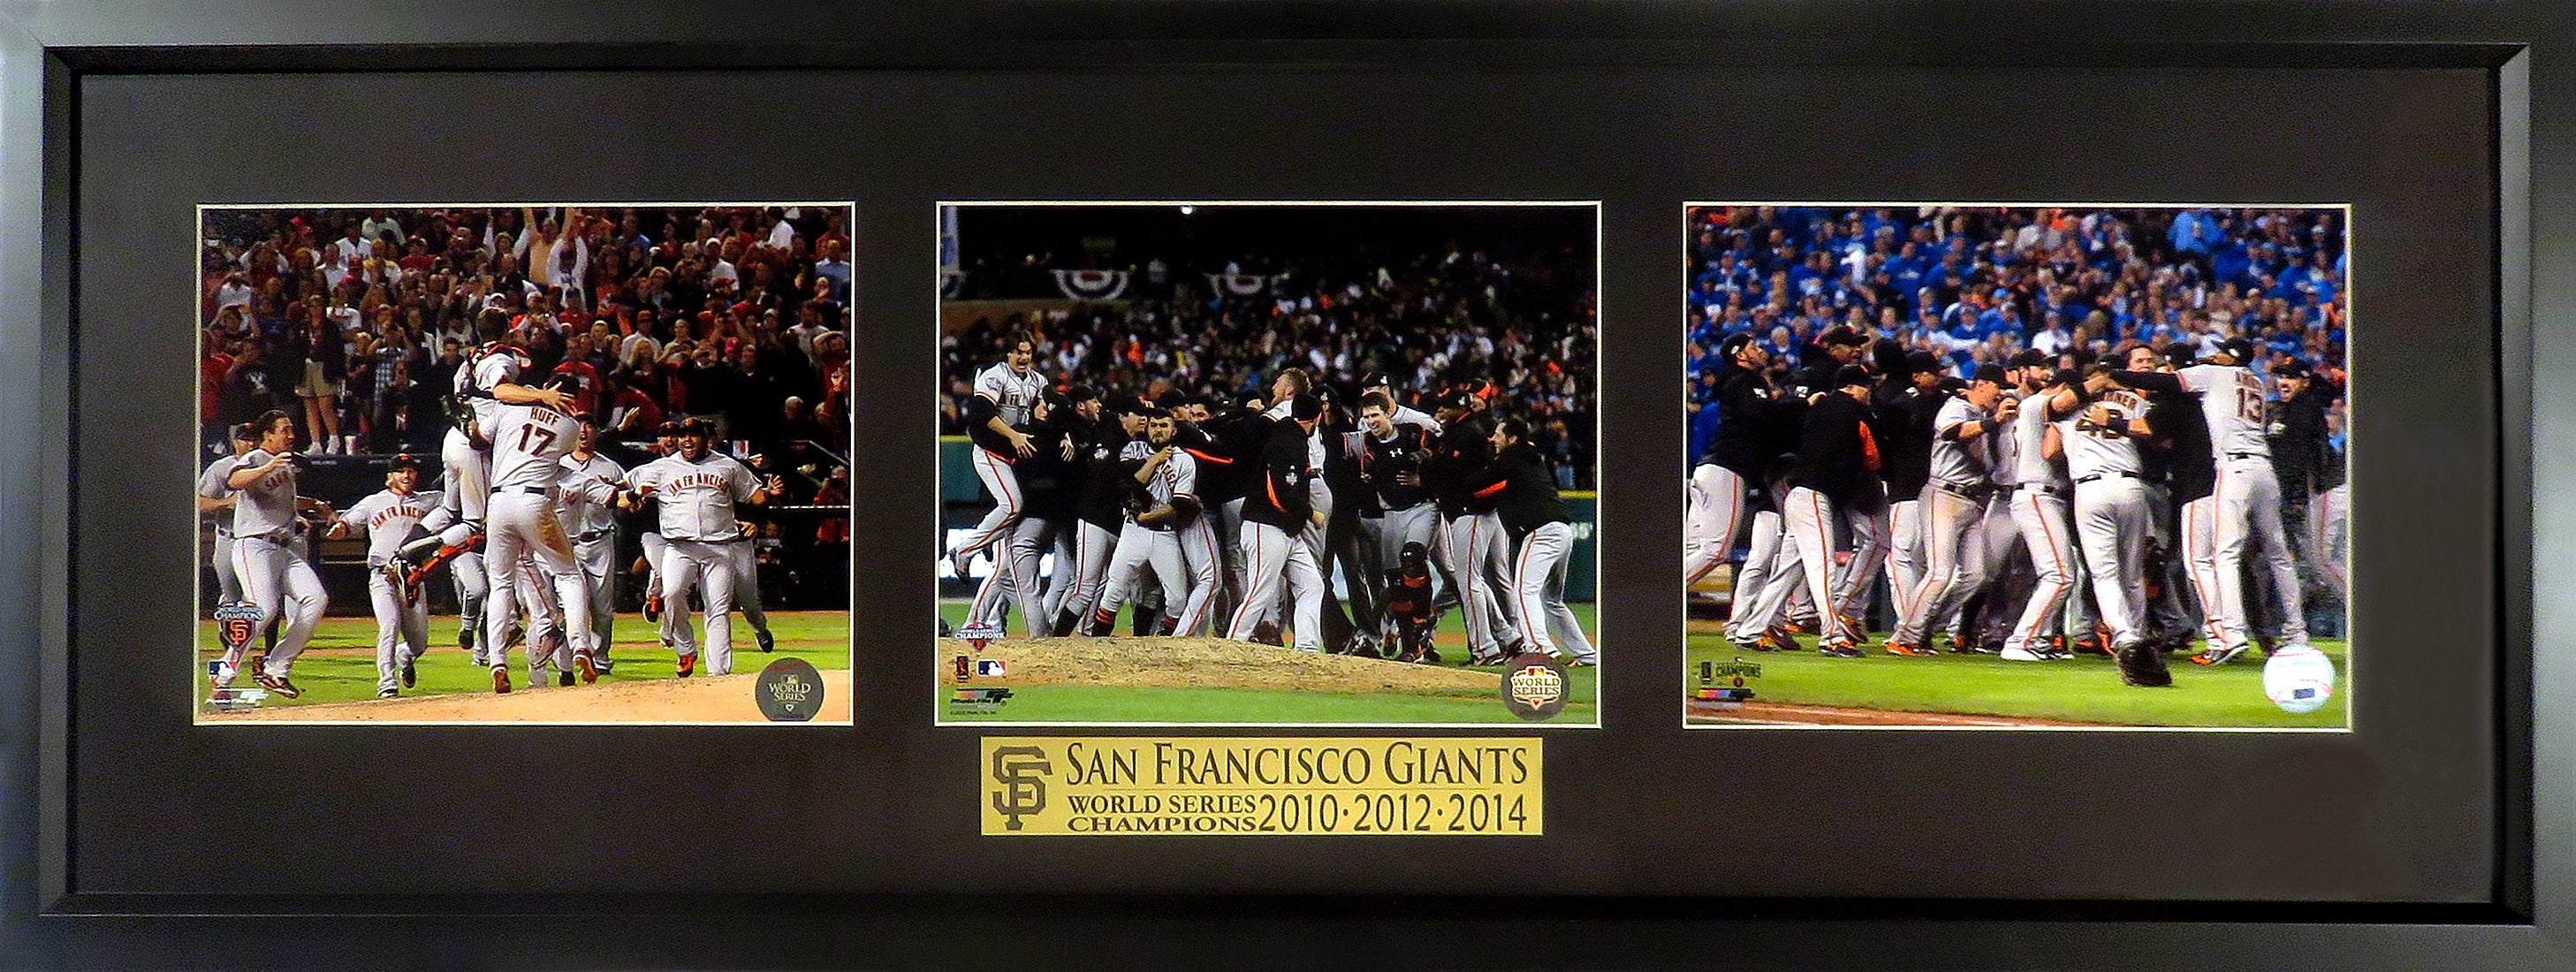 San Francisco Giants Game One 2010 World Series Framed Poster